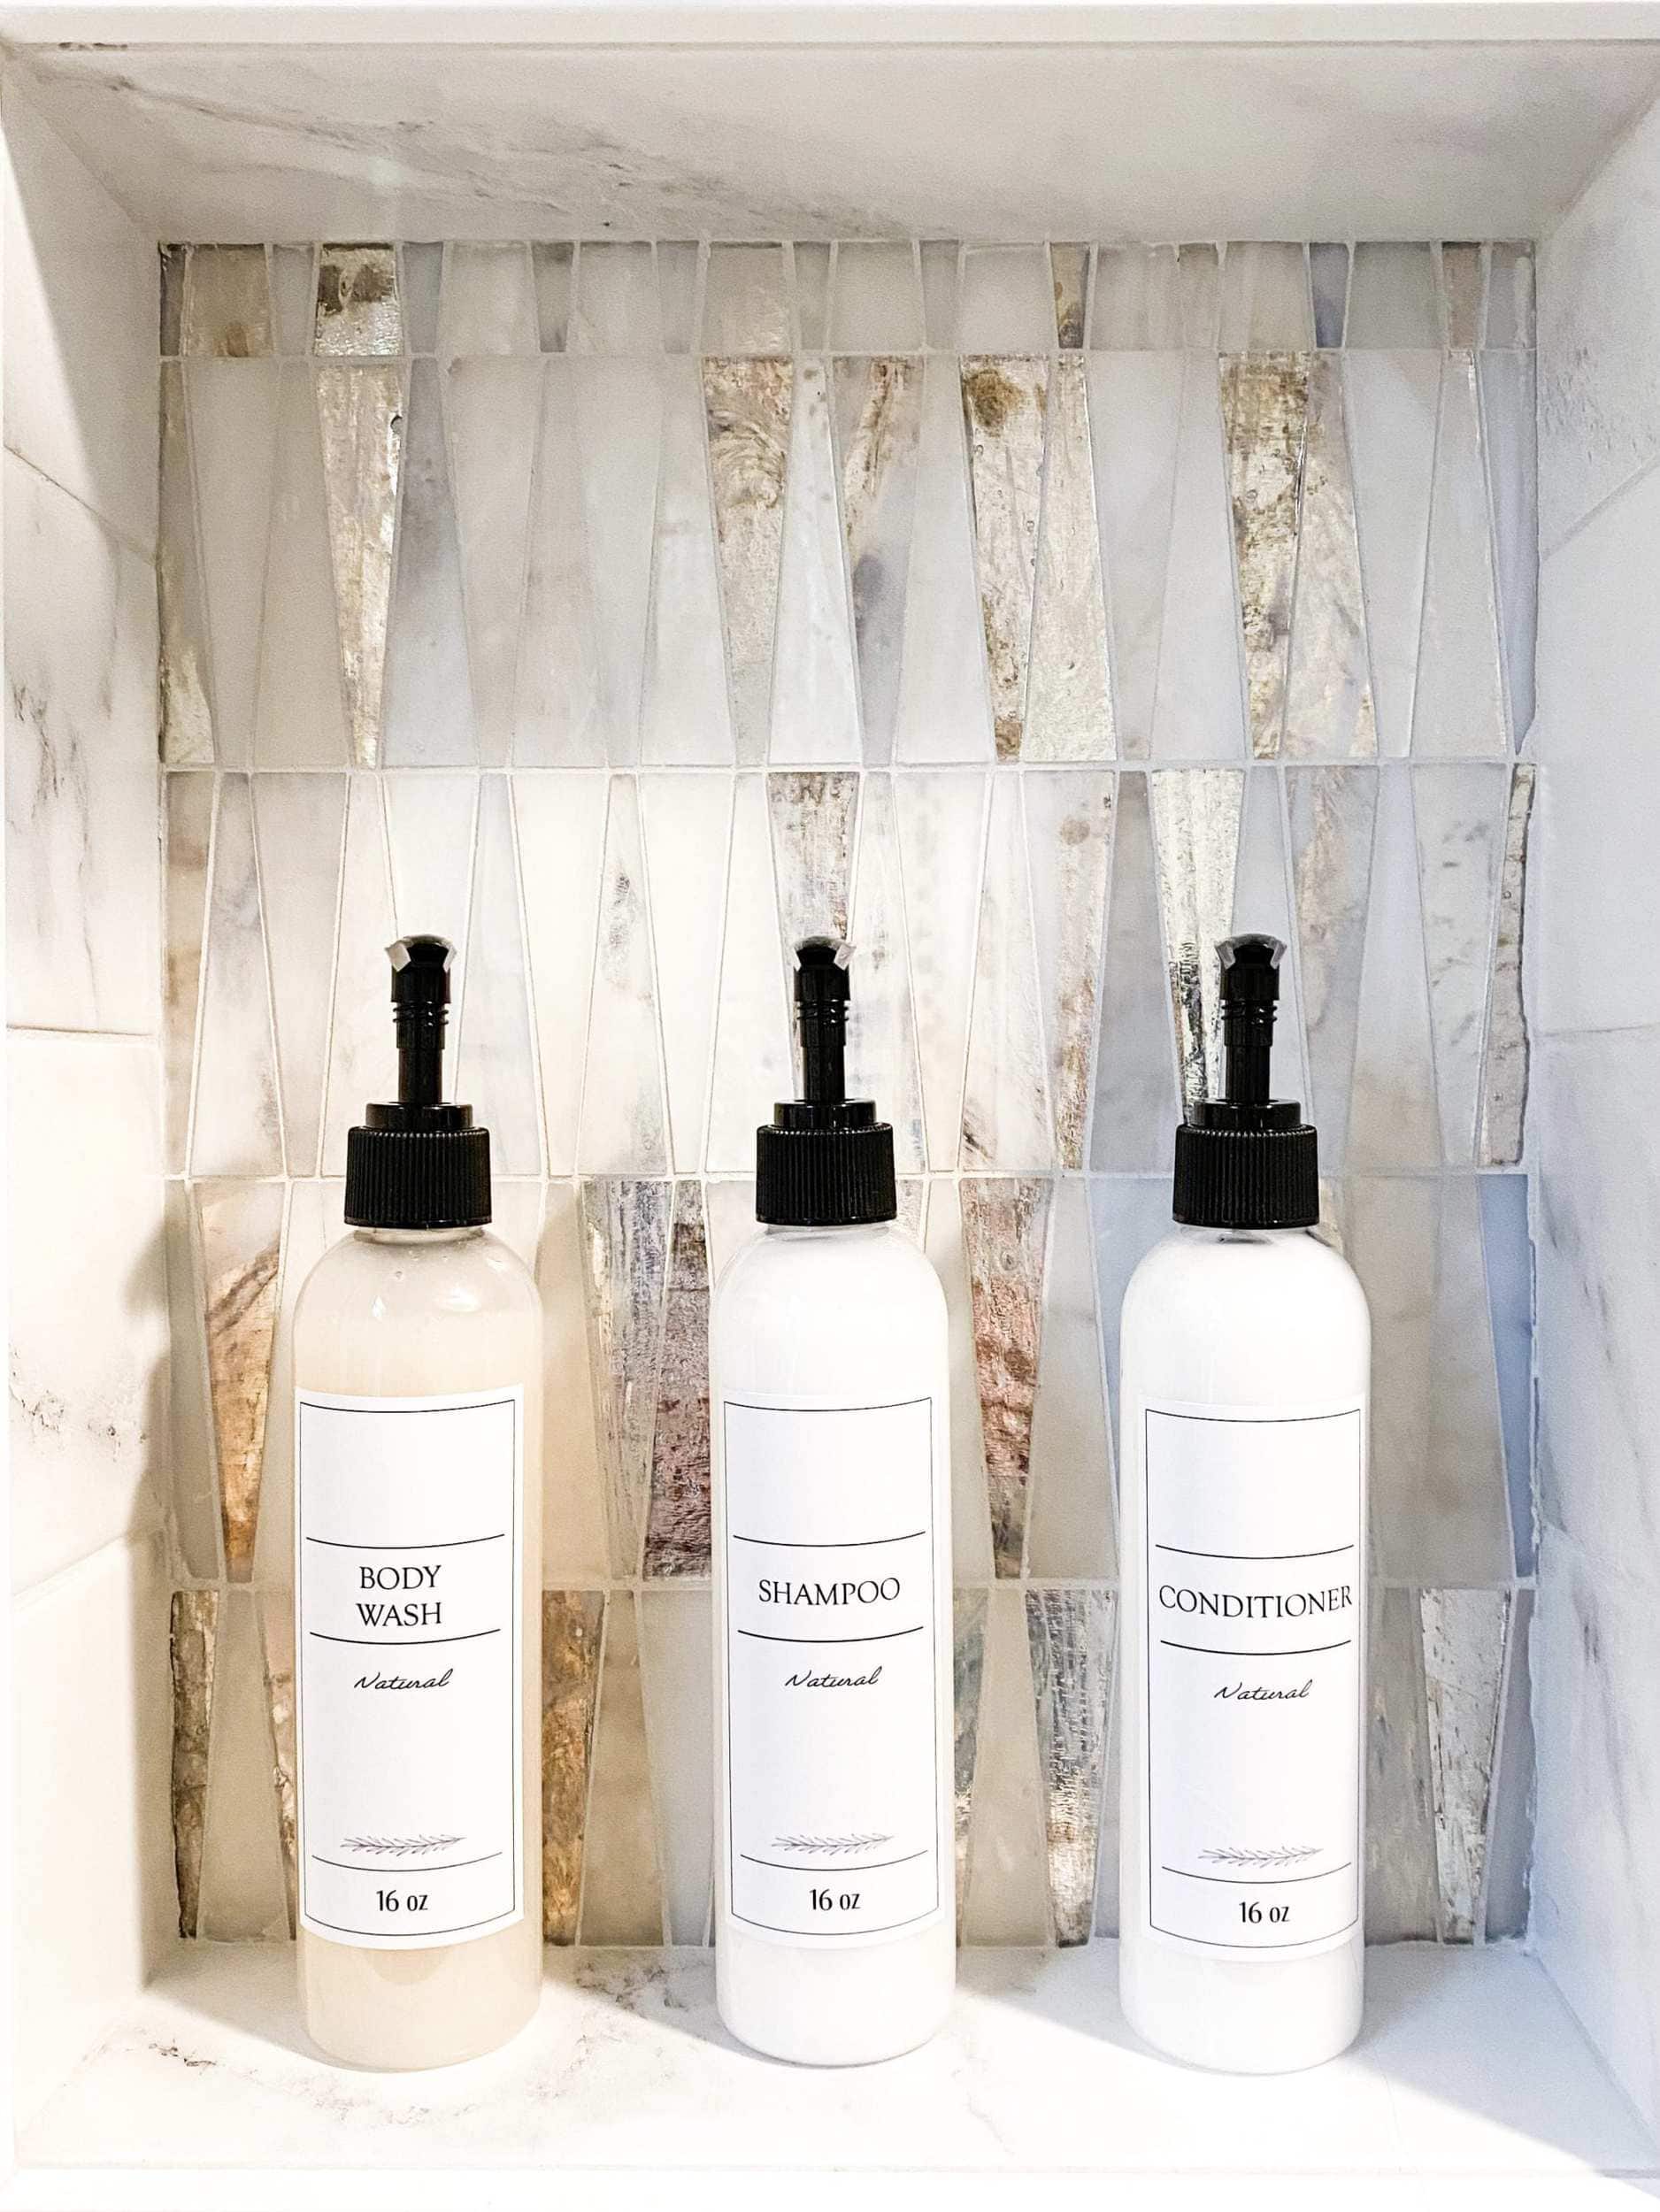 White shampoo bottles with black pumps and a decorative colorful shower niche backsplash